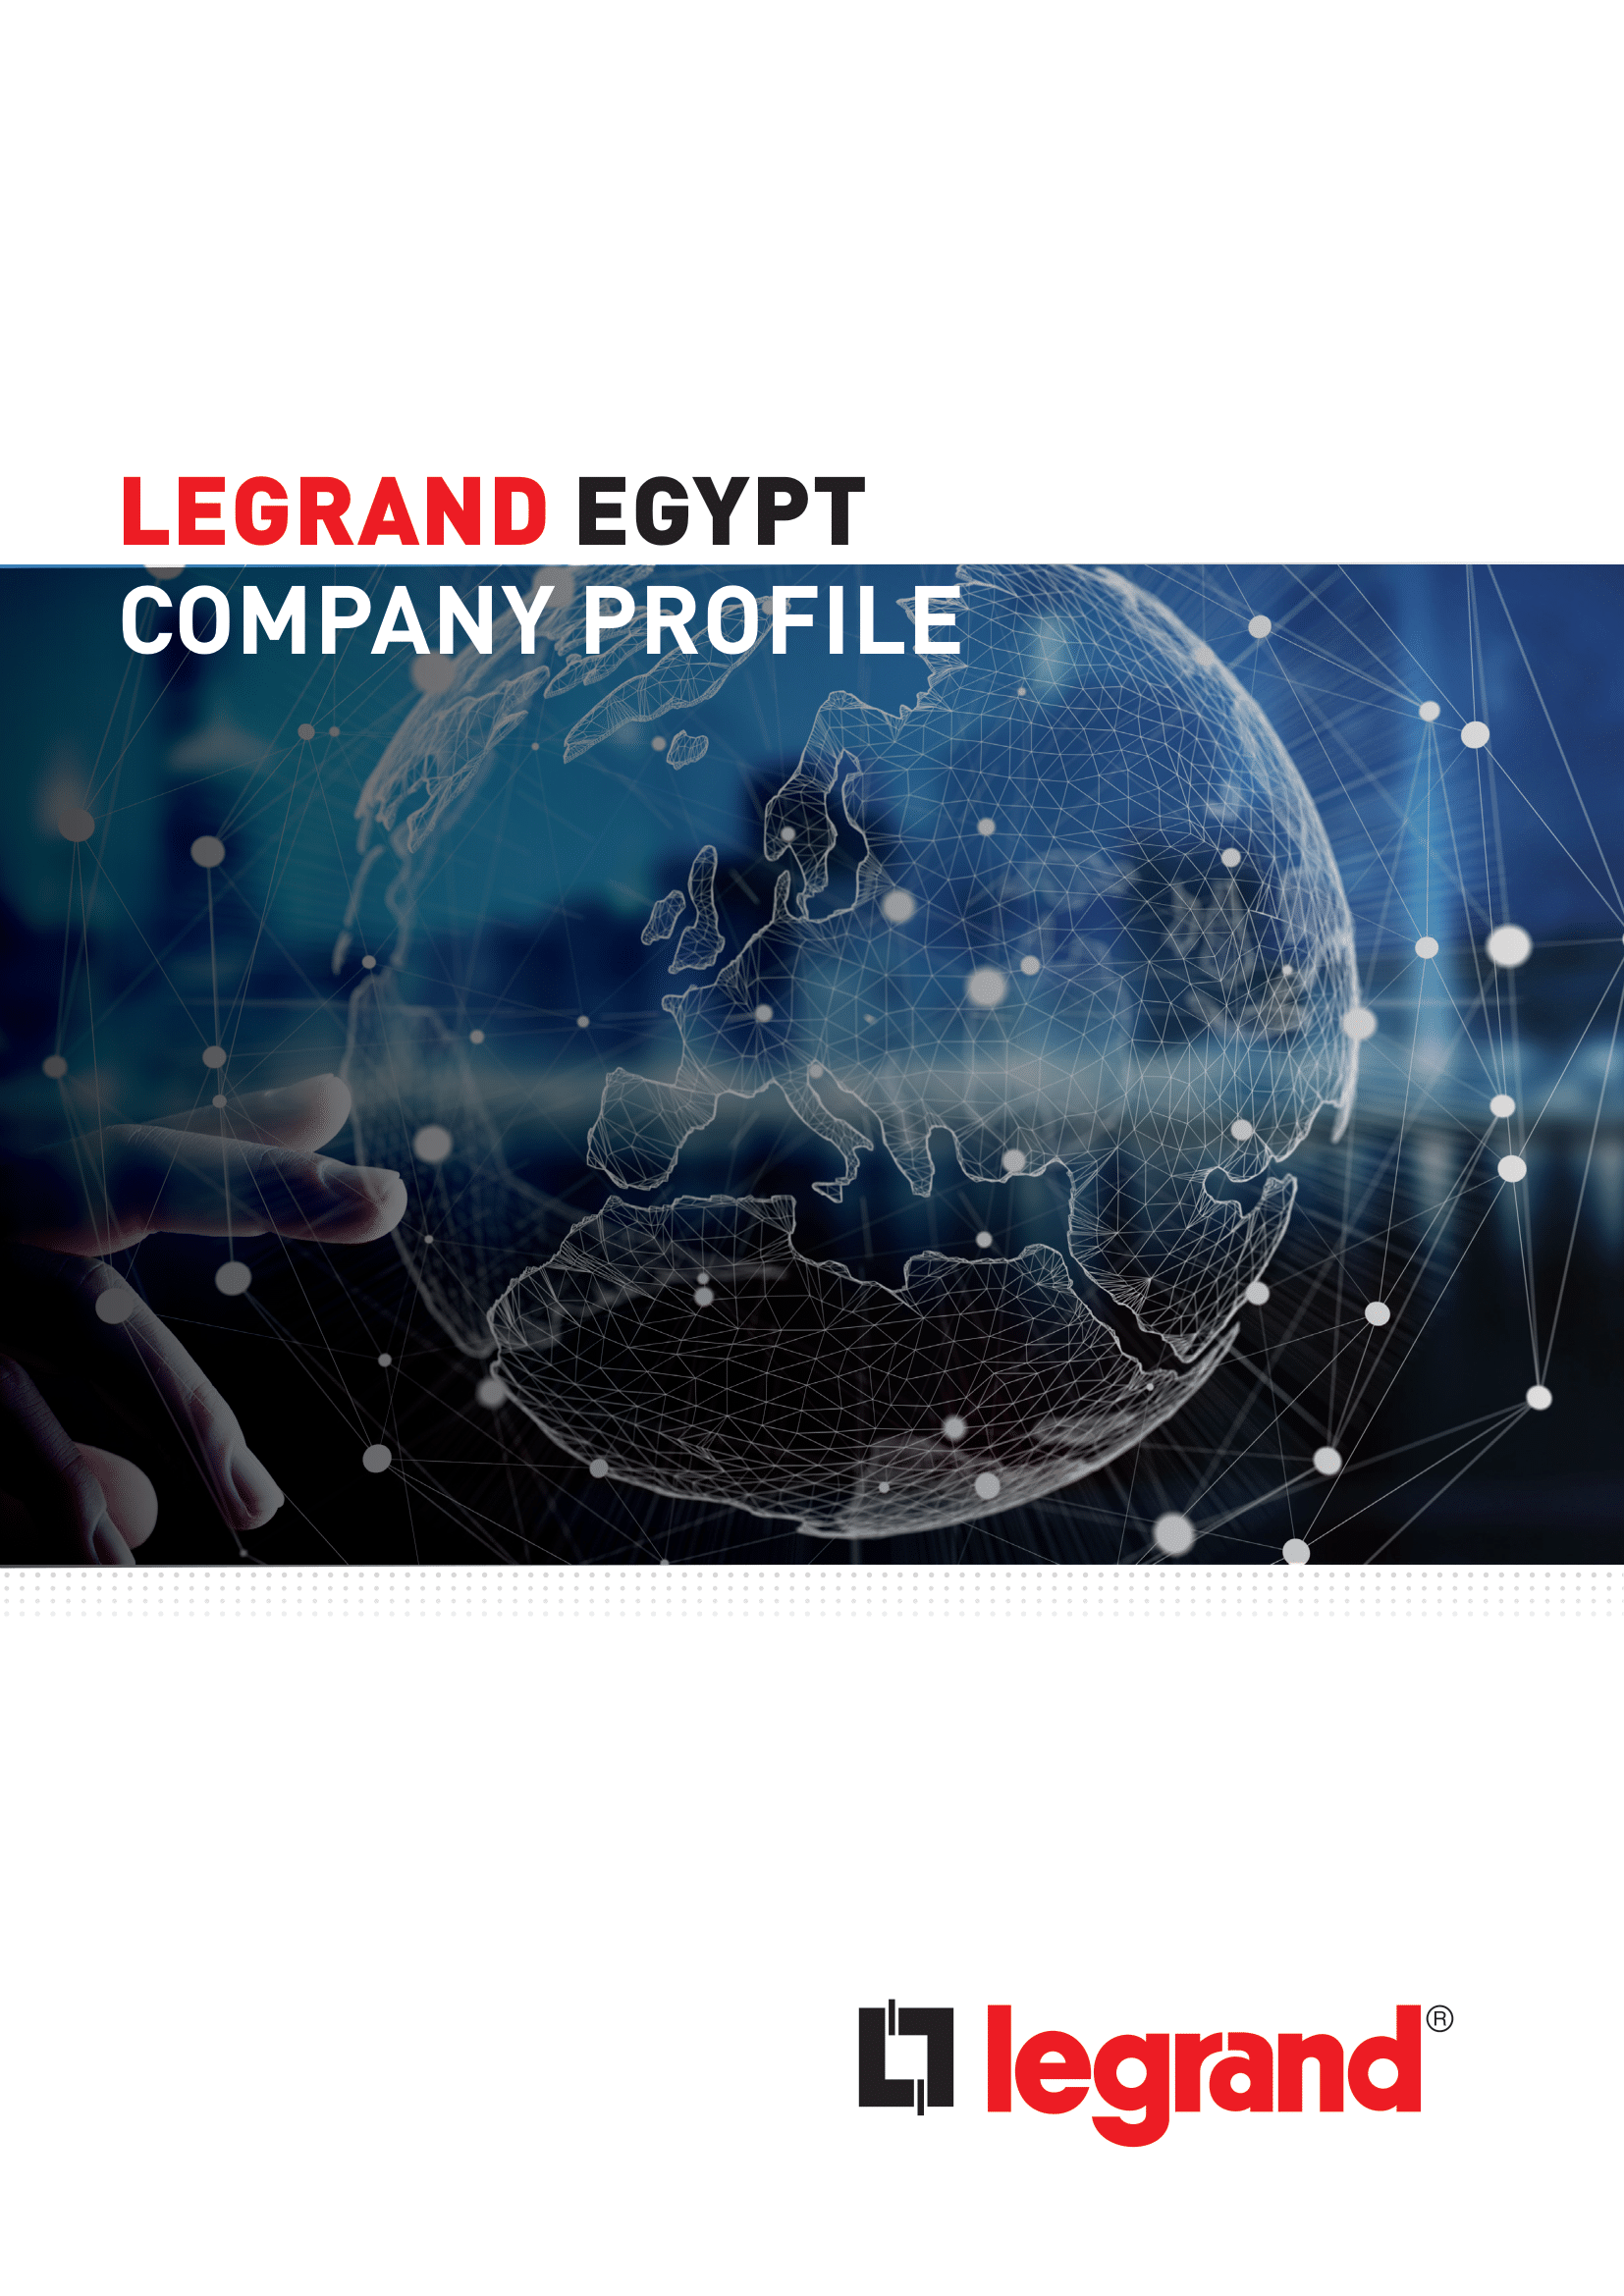 legrand_egypt_company_profile.png